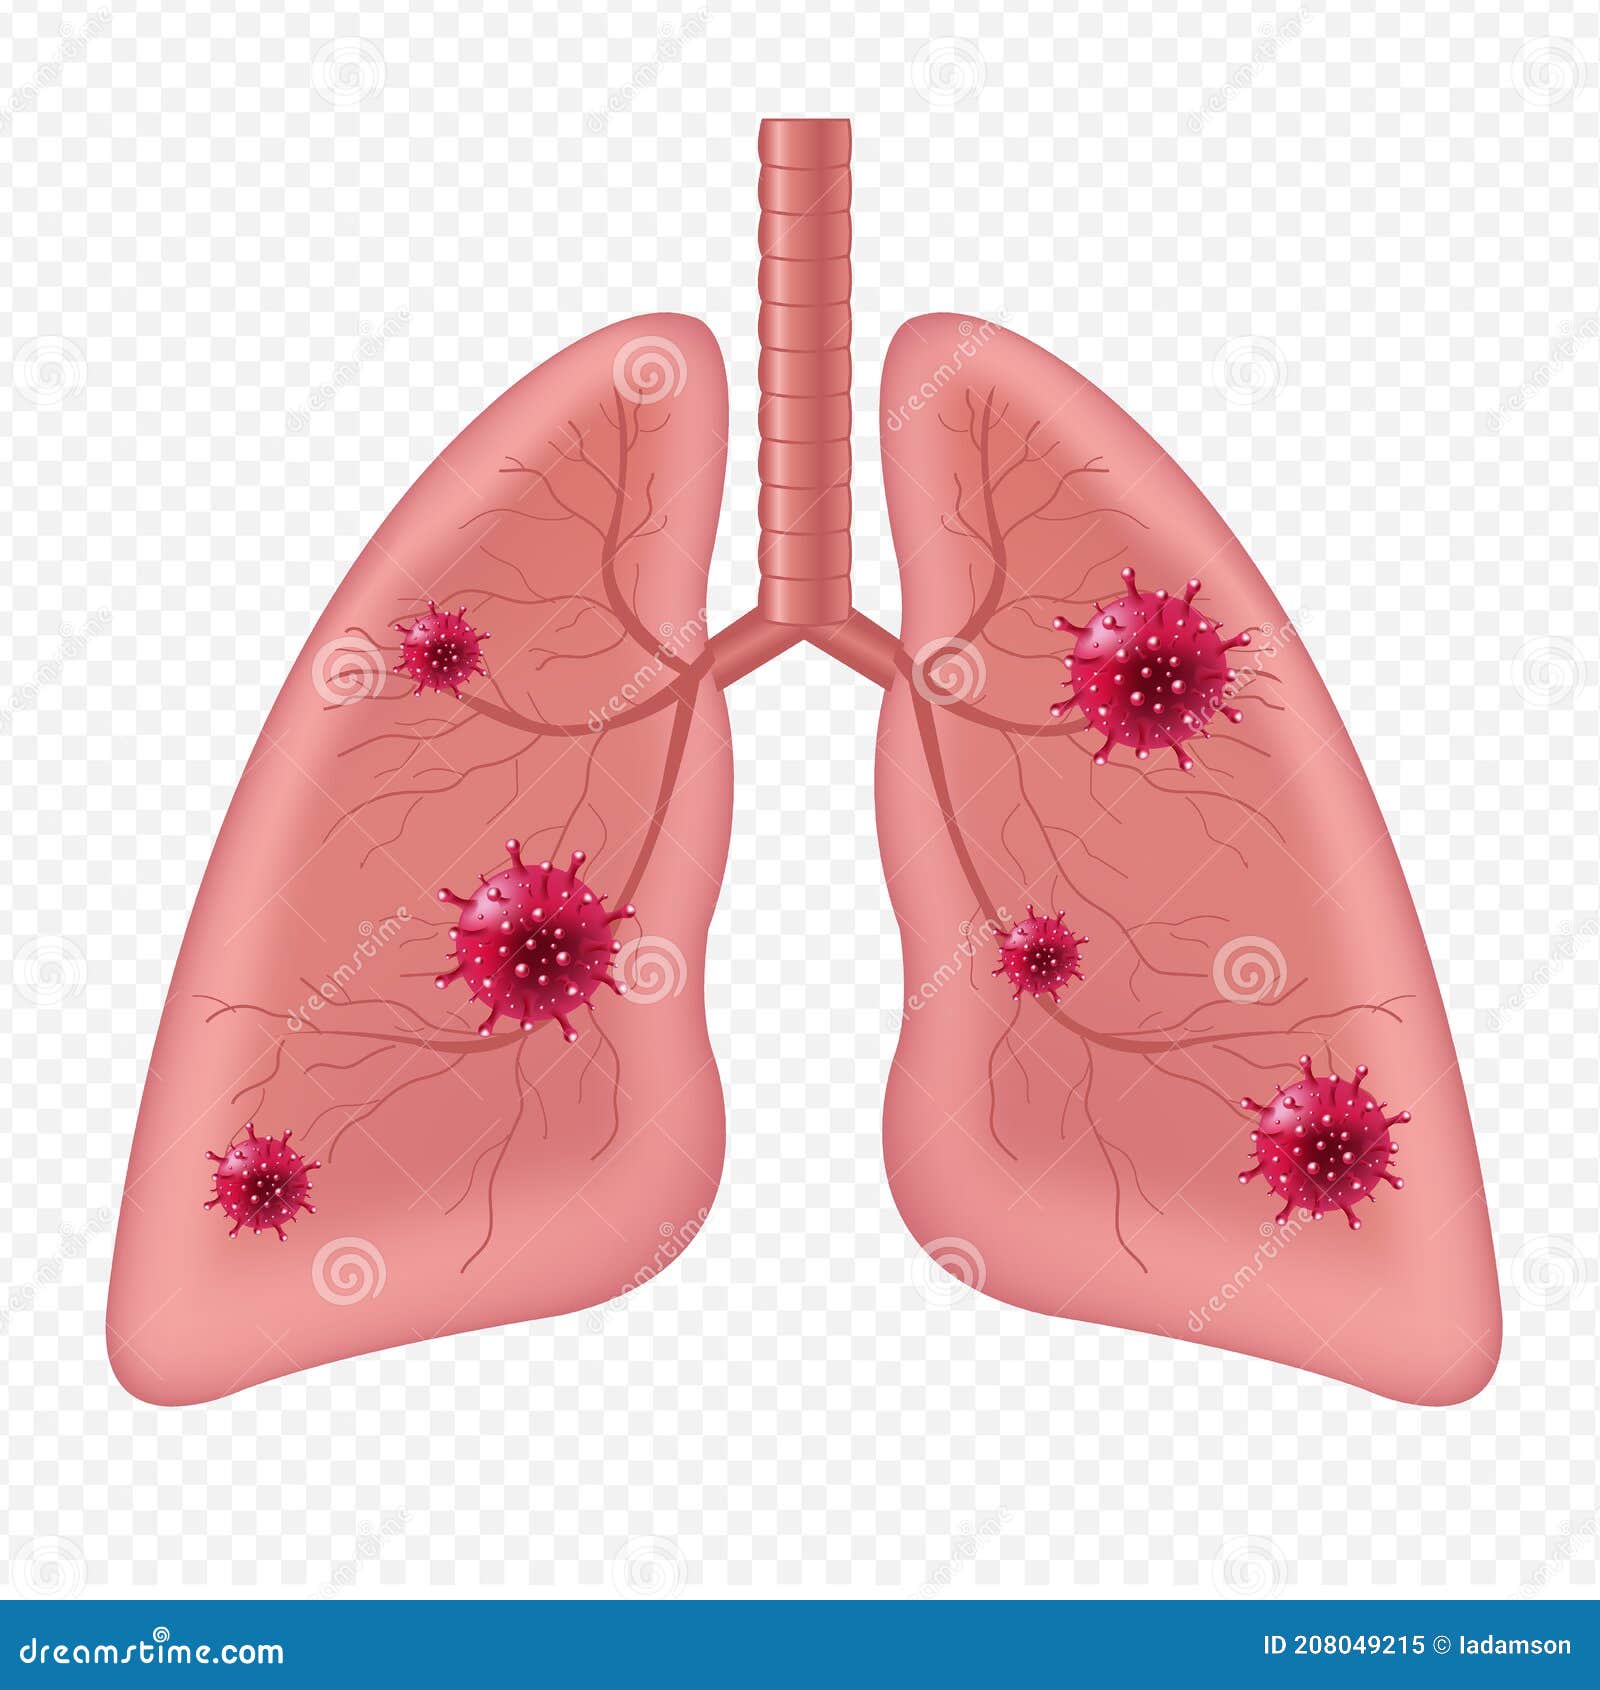 lungs human internal organ with coronavirus  white background